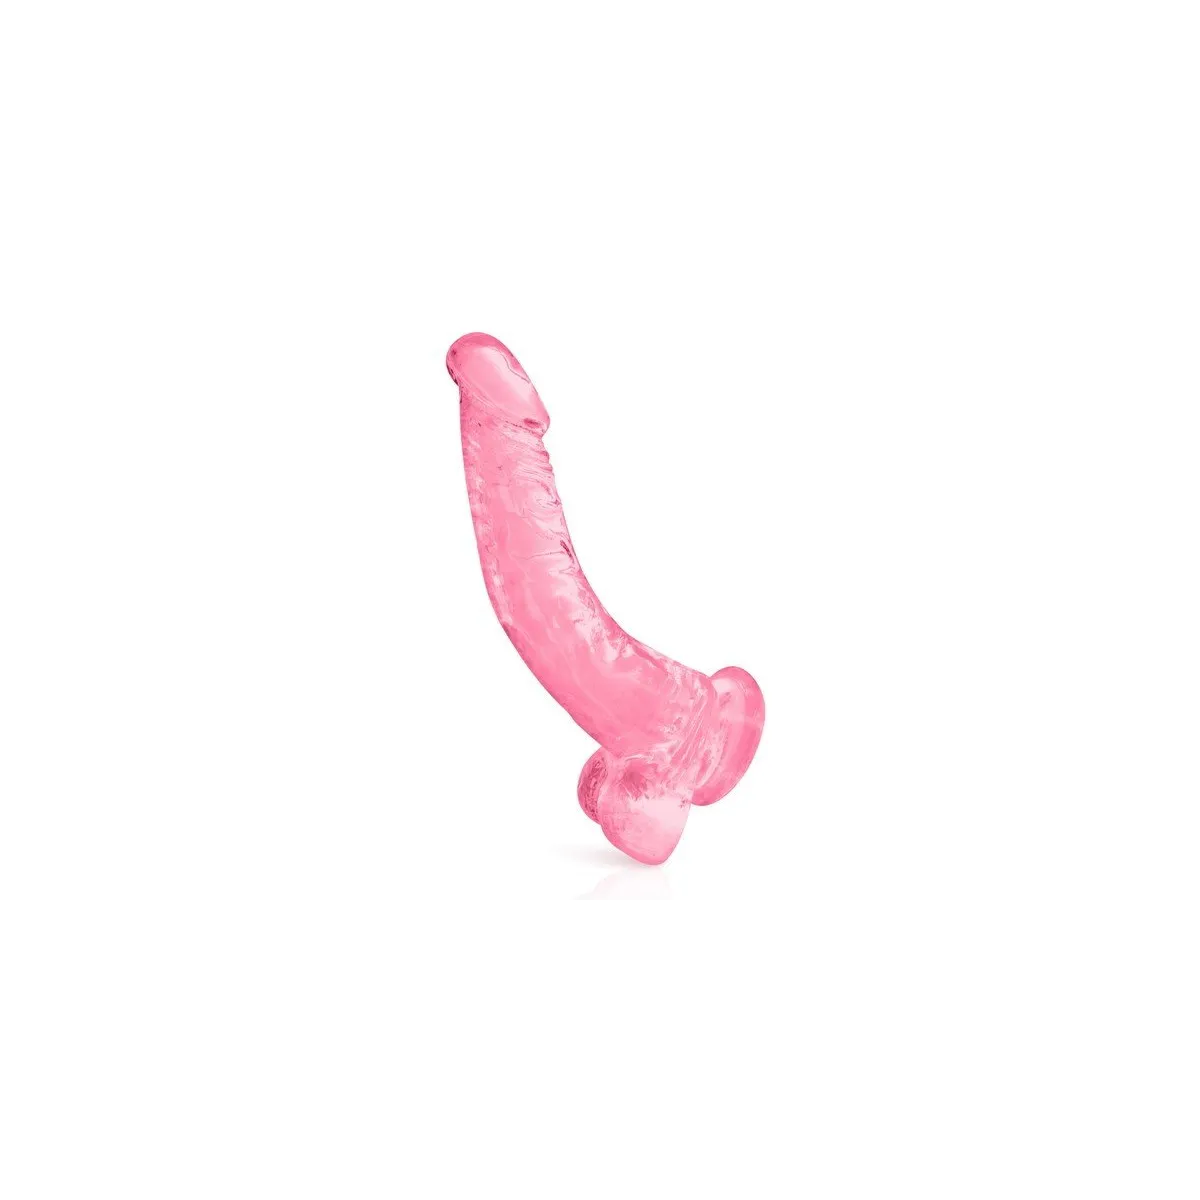 Translucent pink dildo curved Jelly 22 Cm